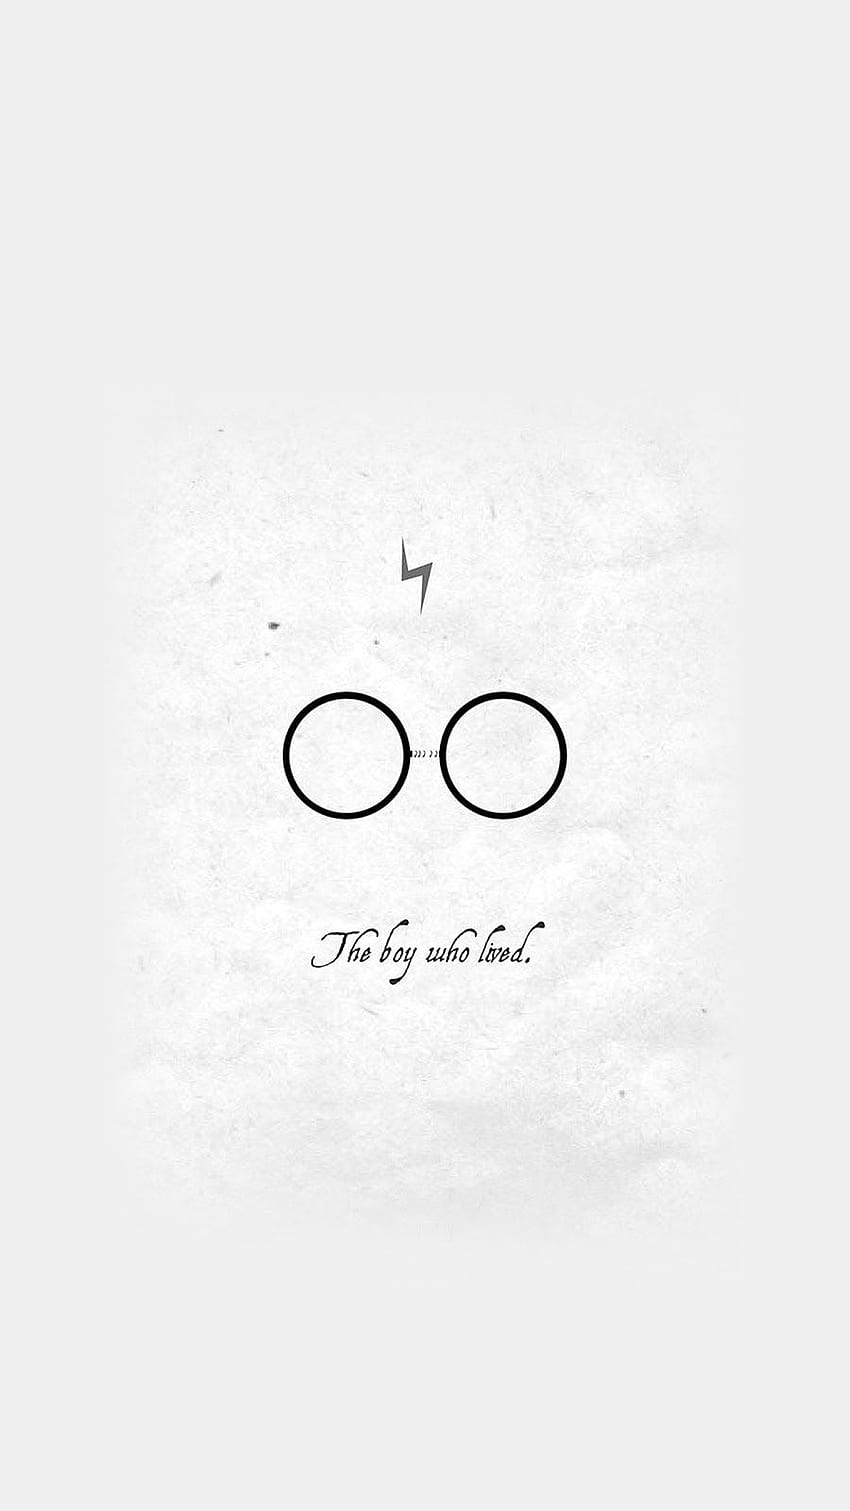 100 Cute Harry Potter Background s  Wallpaperscom